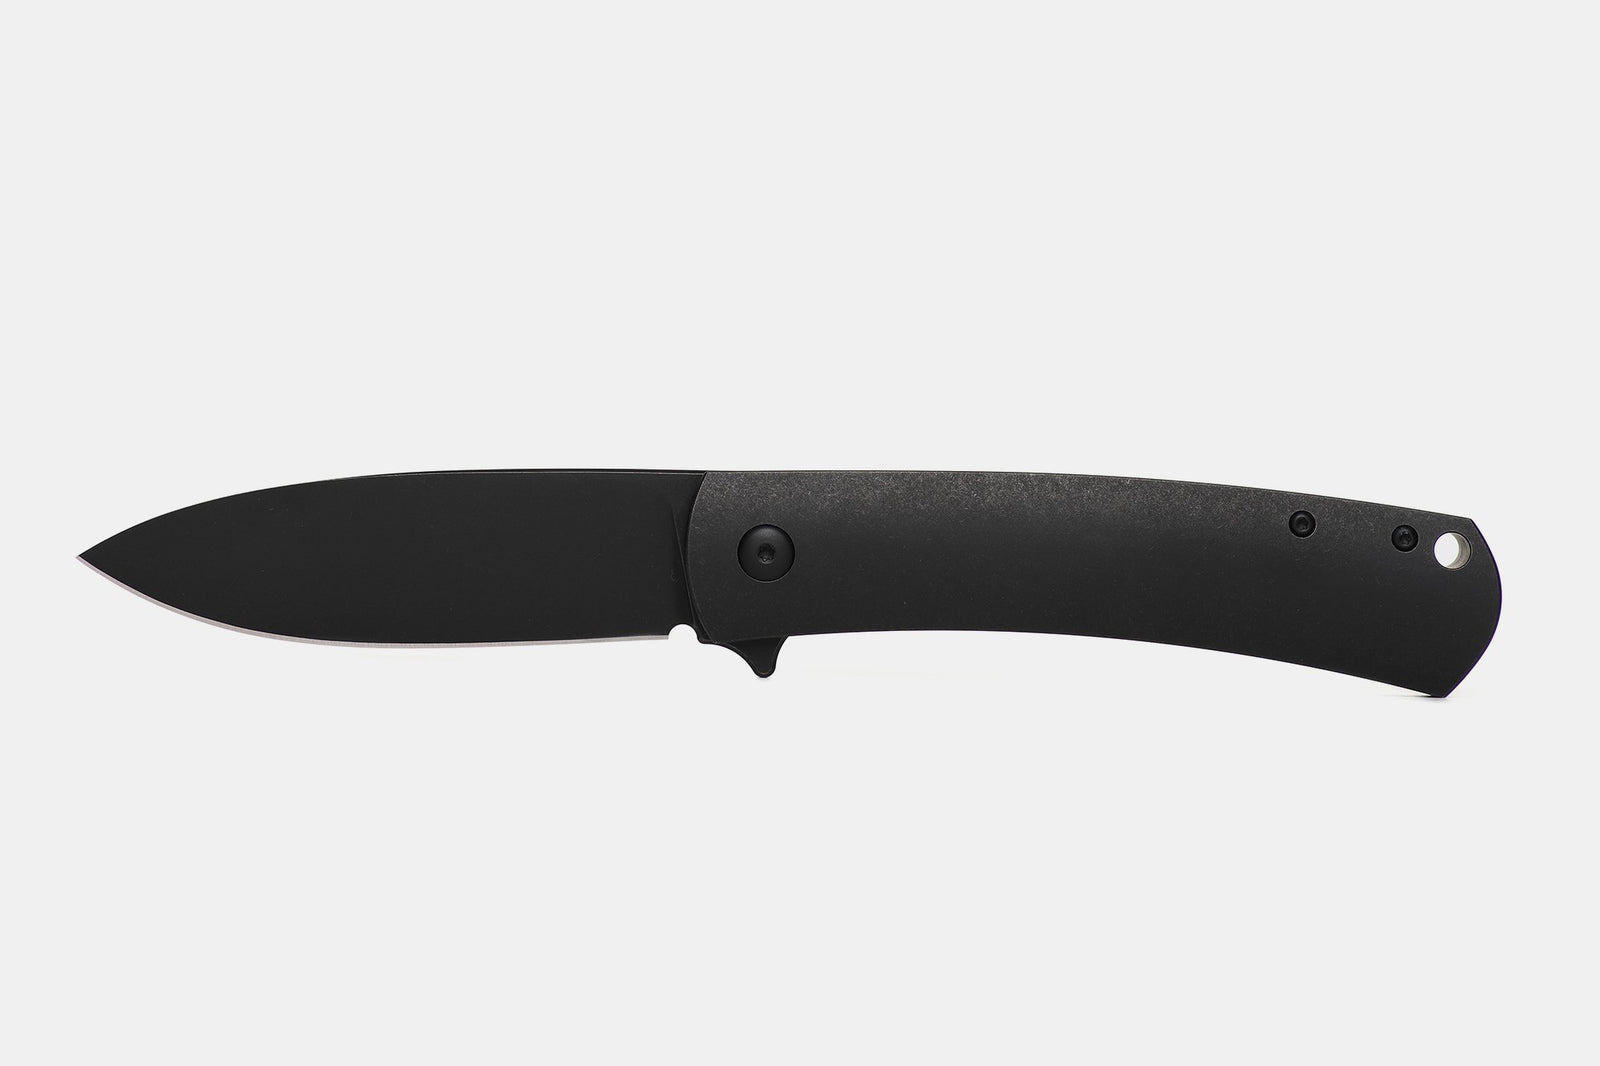 Kaviso x Laconico Keen Folding Knife CPM S35VN Blade Steel Titanium Frame Lock Spear Point Pocket Knife by Ray Laconico with Flipper Tab in Black